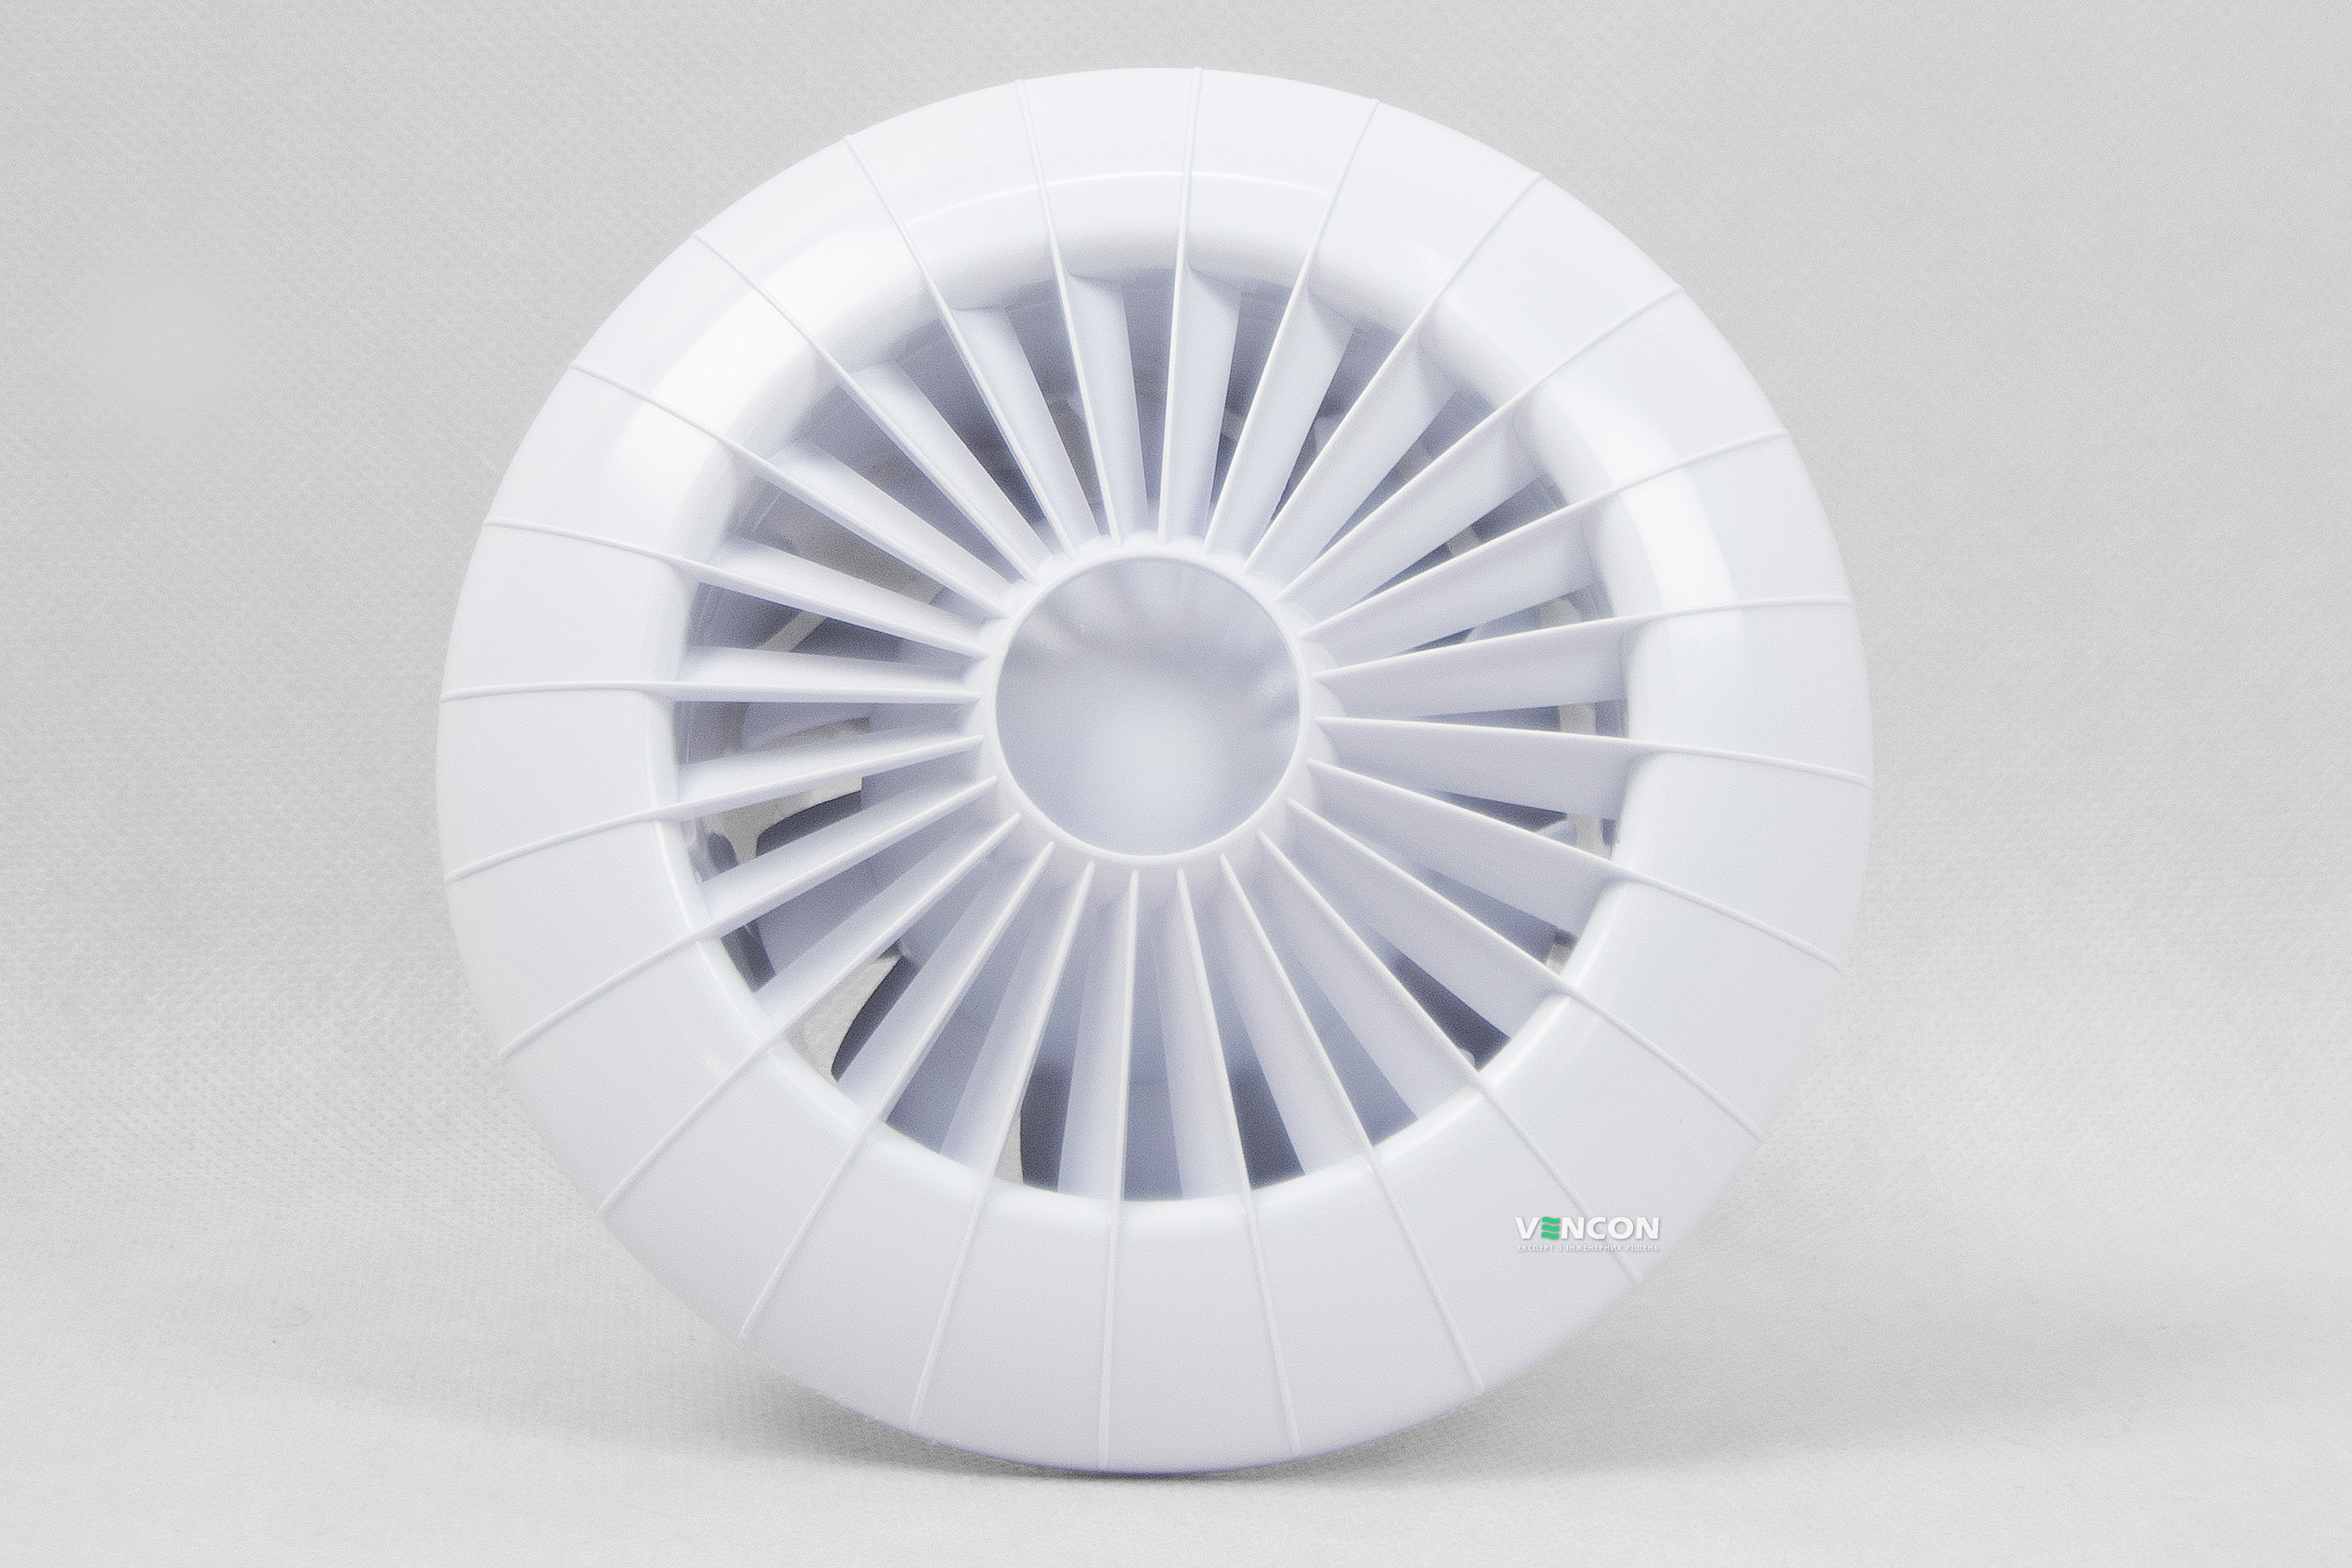 Вытяжной вентилятор AirRoxy aRid 100 BB (01-040) цена 1115.00 грн - фотография 2